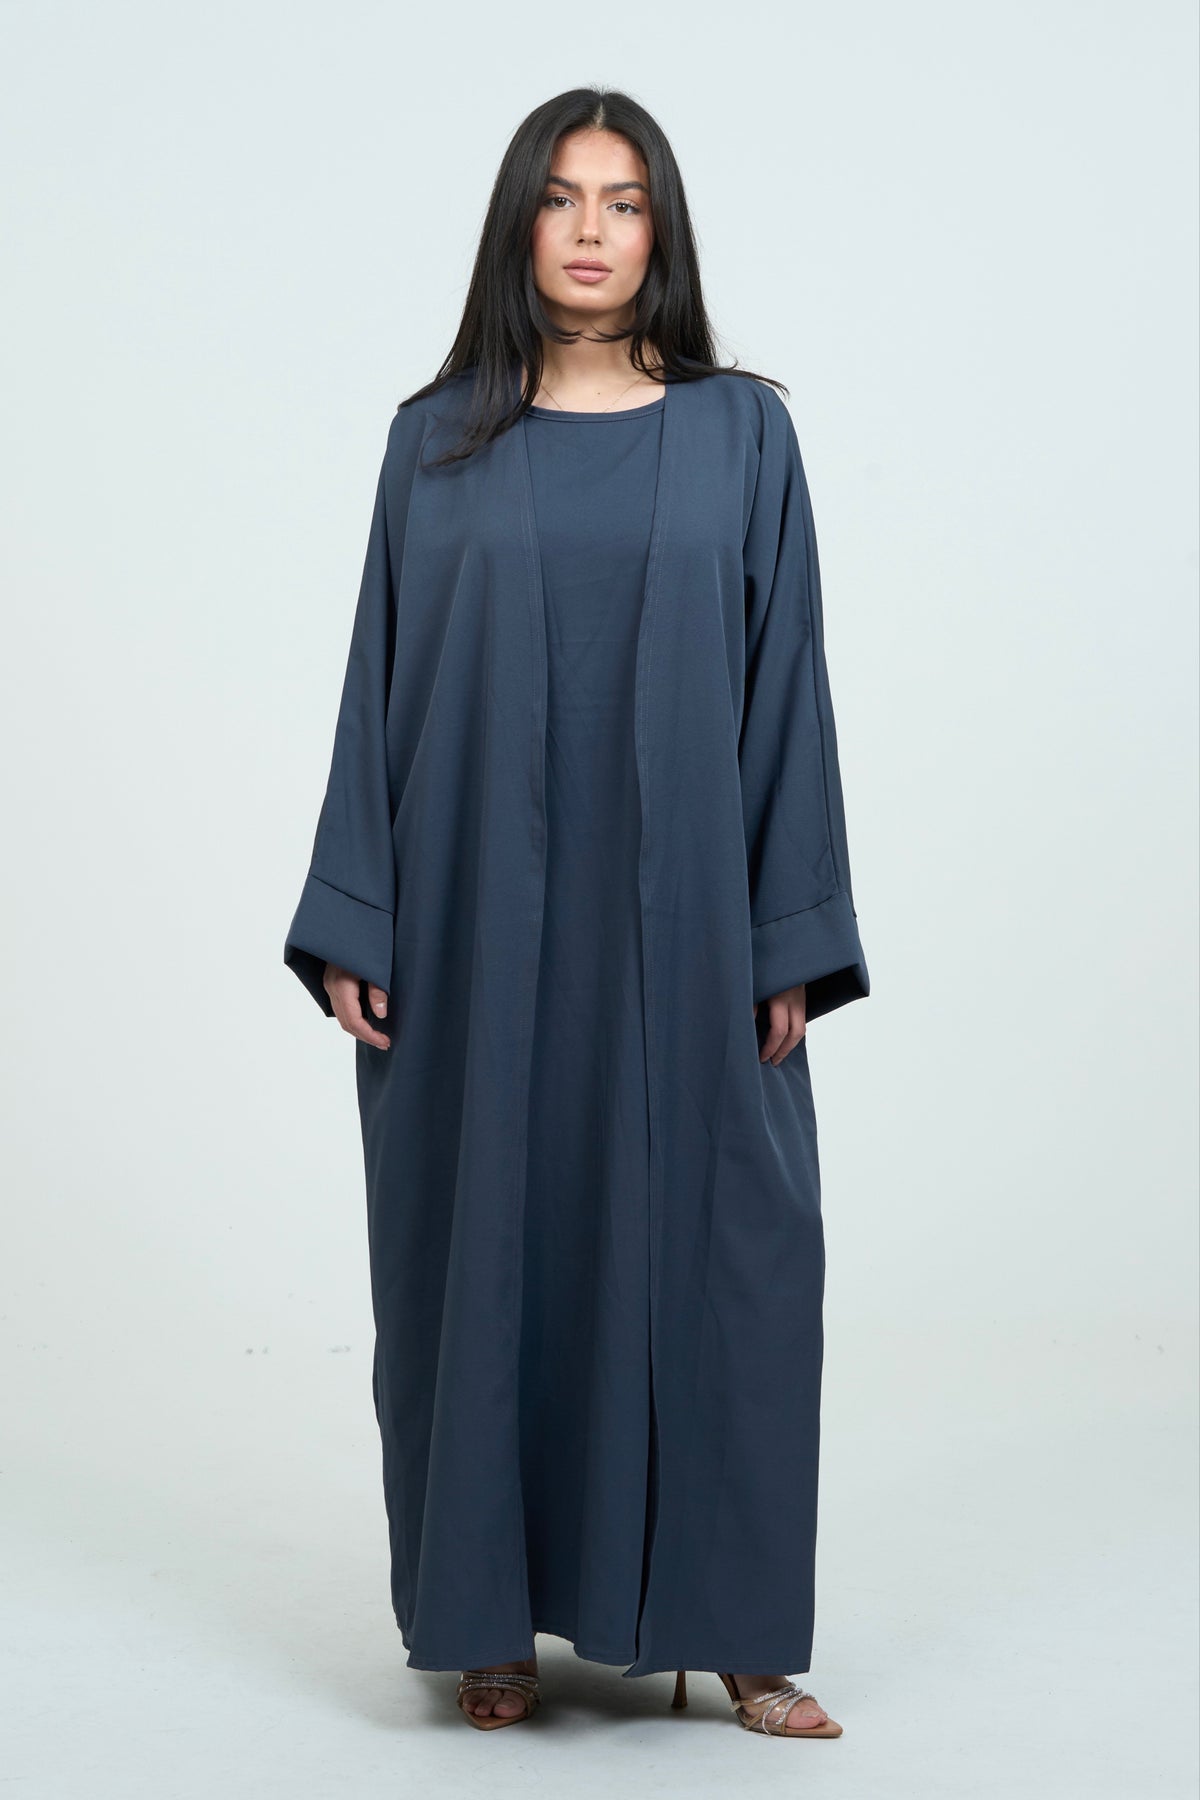 Grey Abaya Set | Complete set with underdress